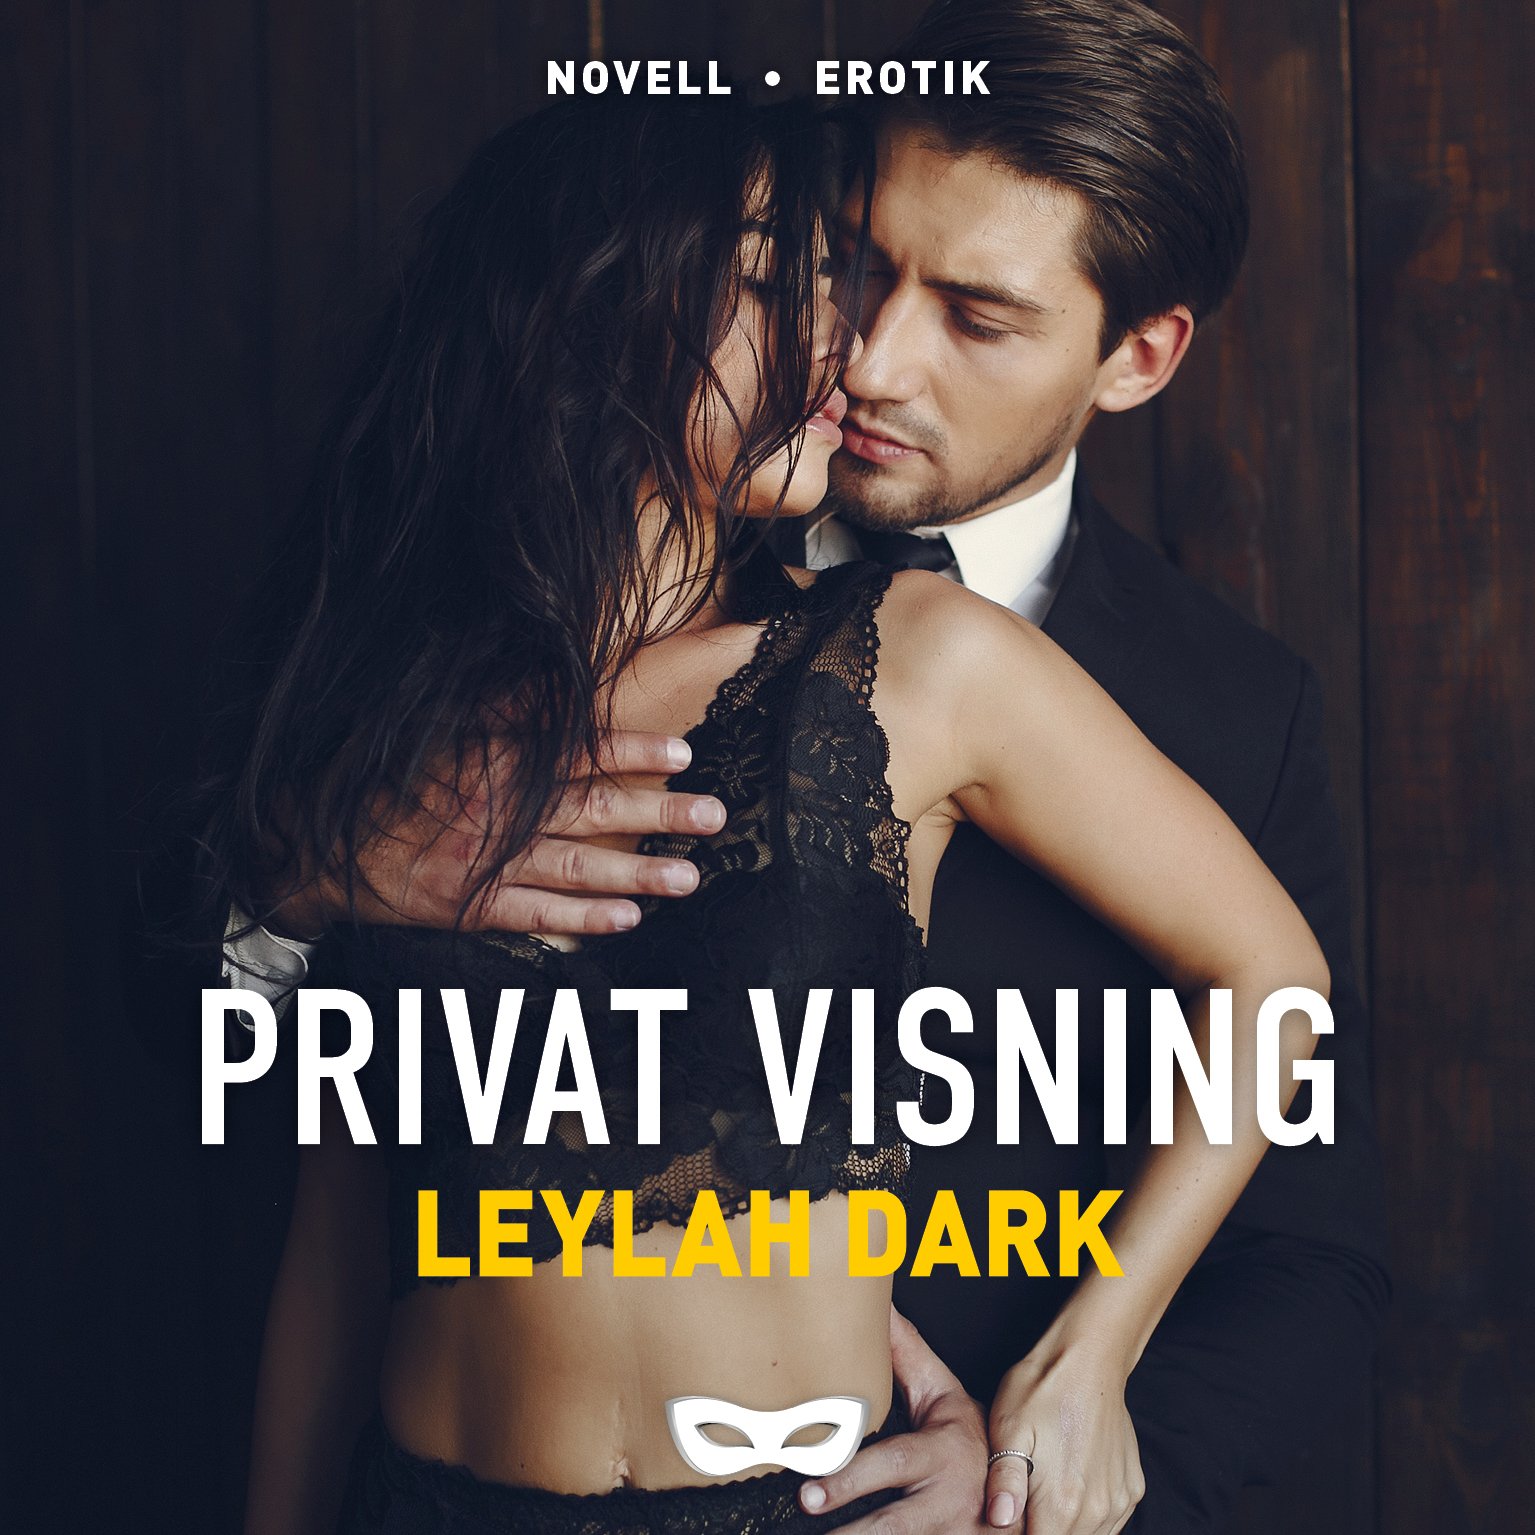 PRIV Leylah Dark Privat visning_omslag audio.jpg